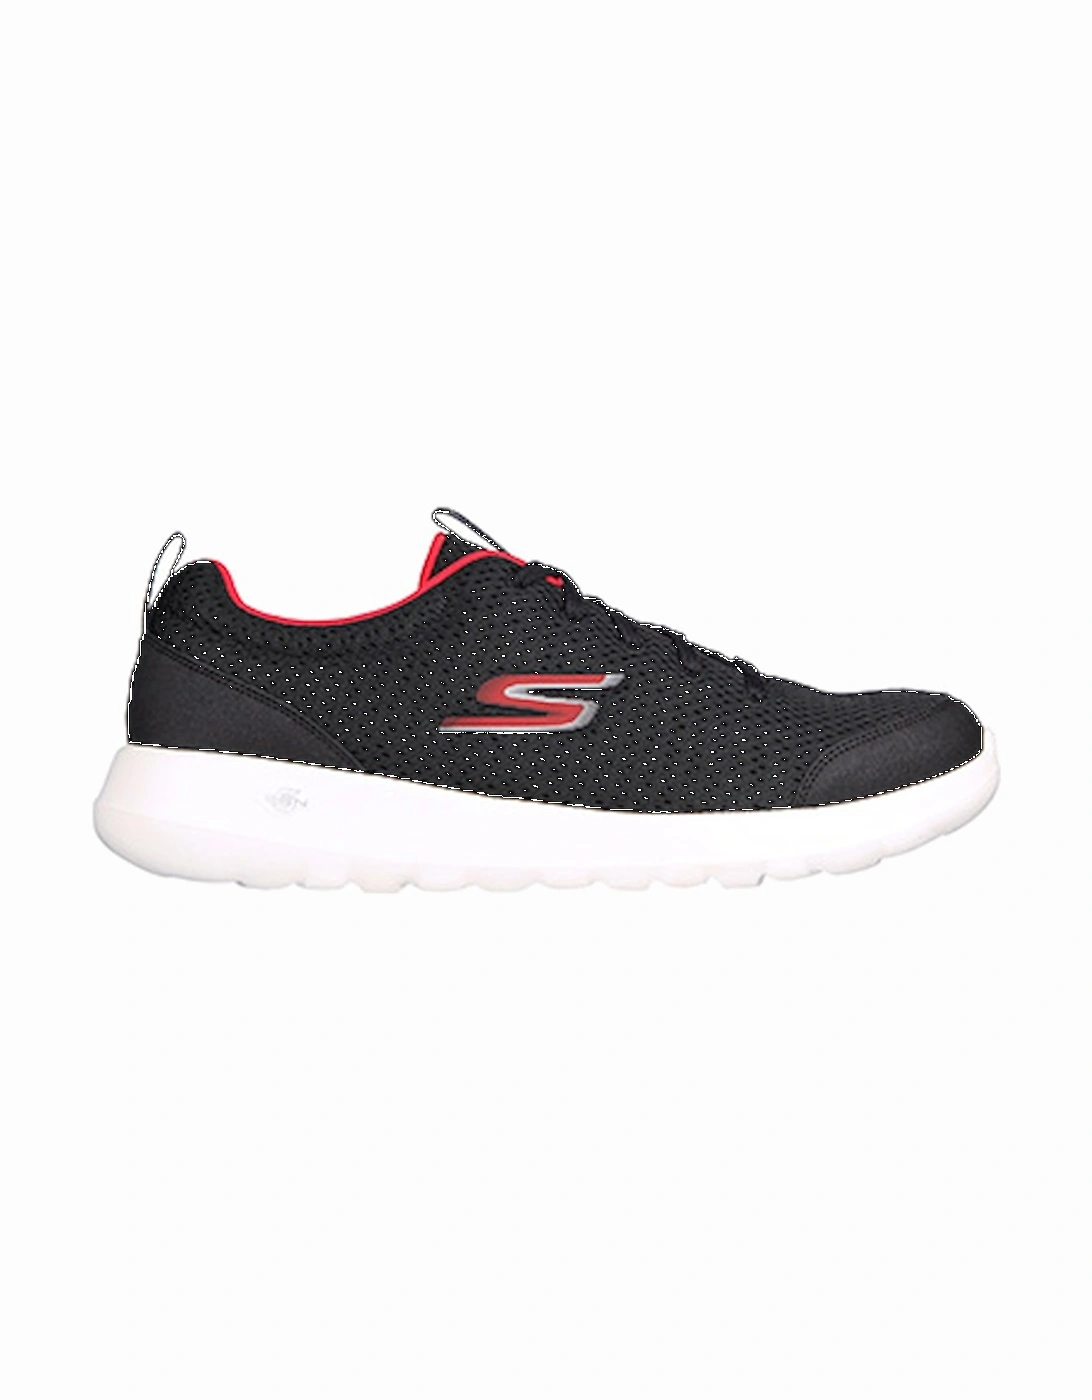 Skechers Men's GOWalk Max Progressor Sports Shoe Black/Red, 5 of 4